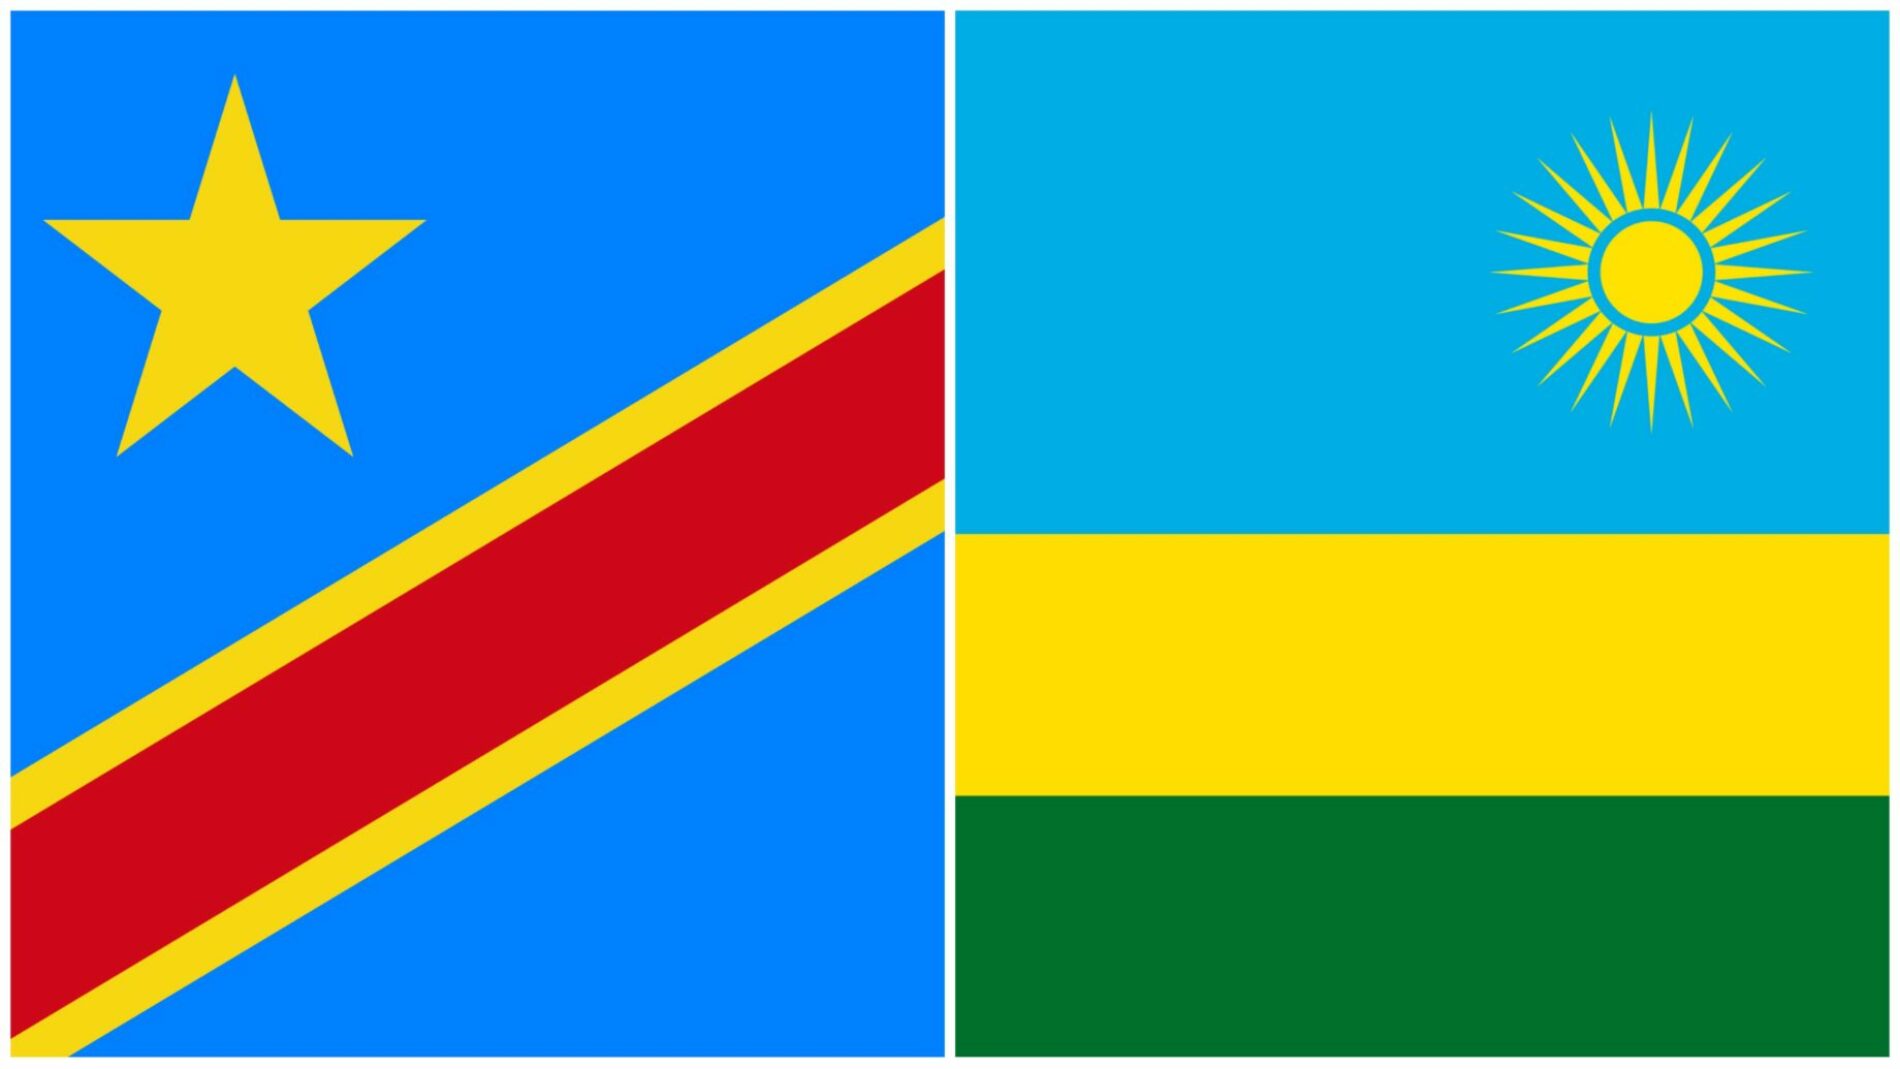 Rwanda-DRC : the Rwandan army fired on a Congolese fighter plane